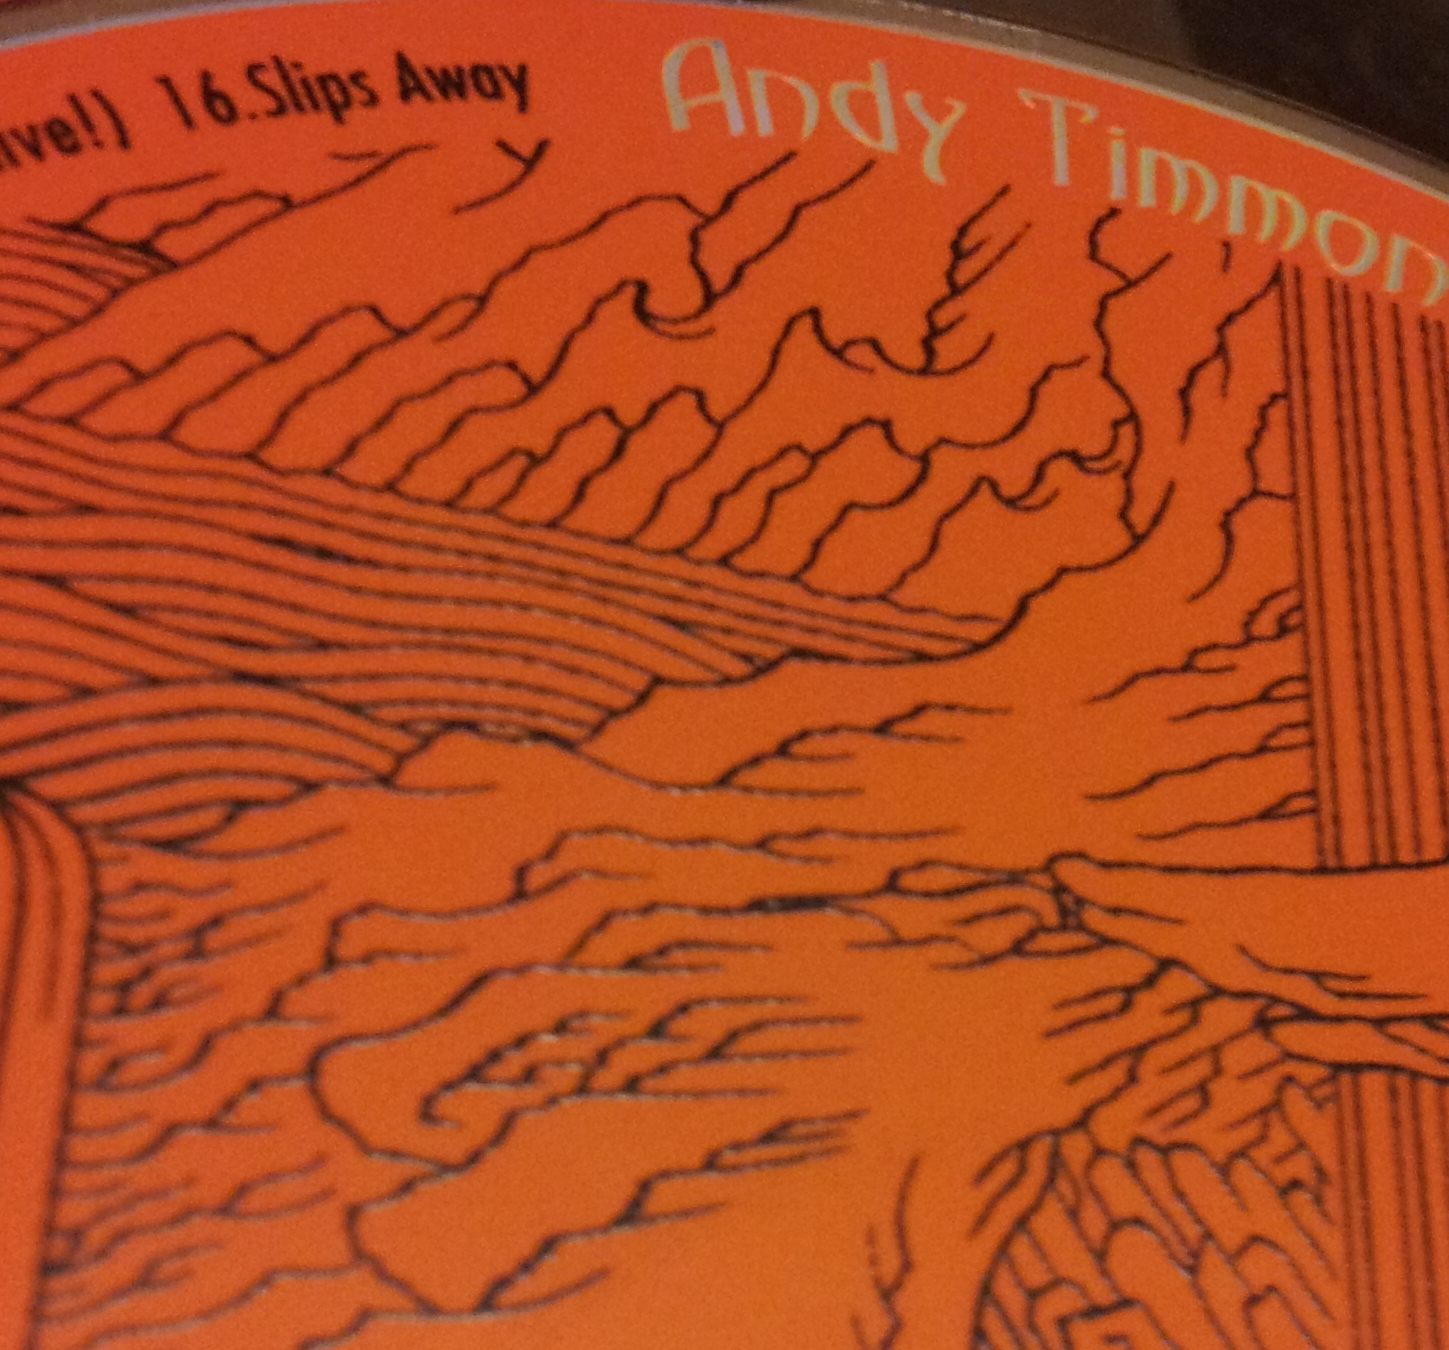 Andy Timmons（アンディ・ティモンズ）「Electric Gypsy」の弾き方を解析する